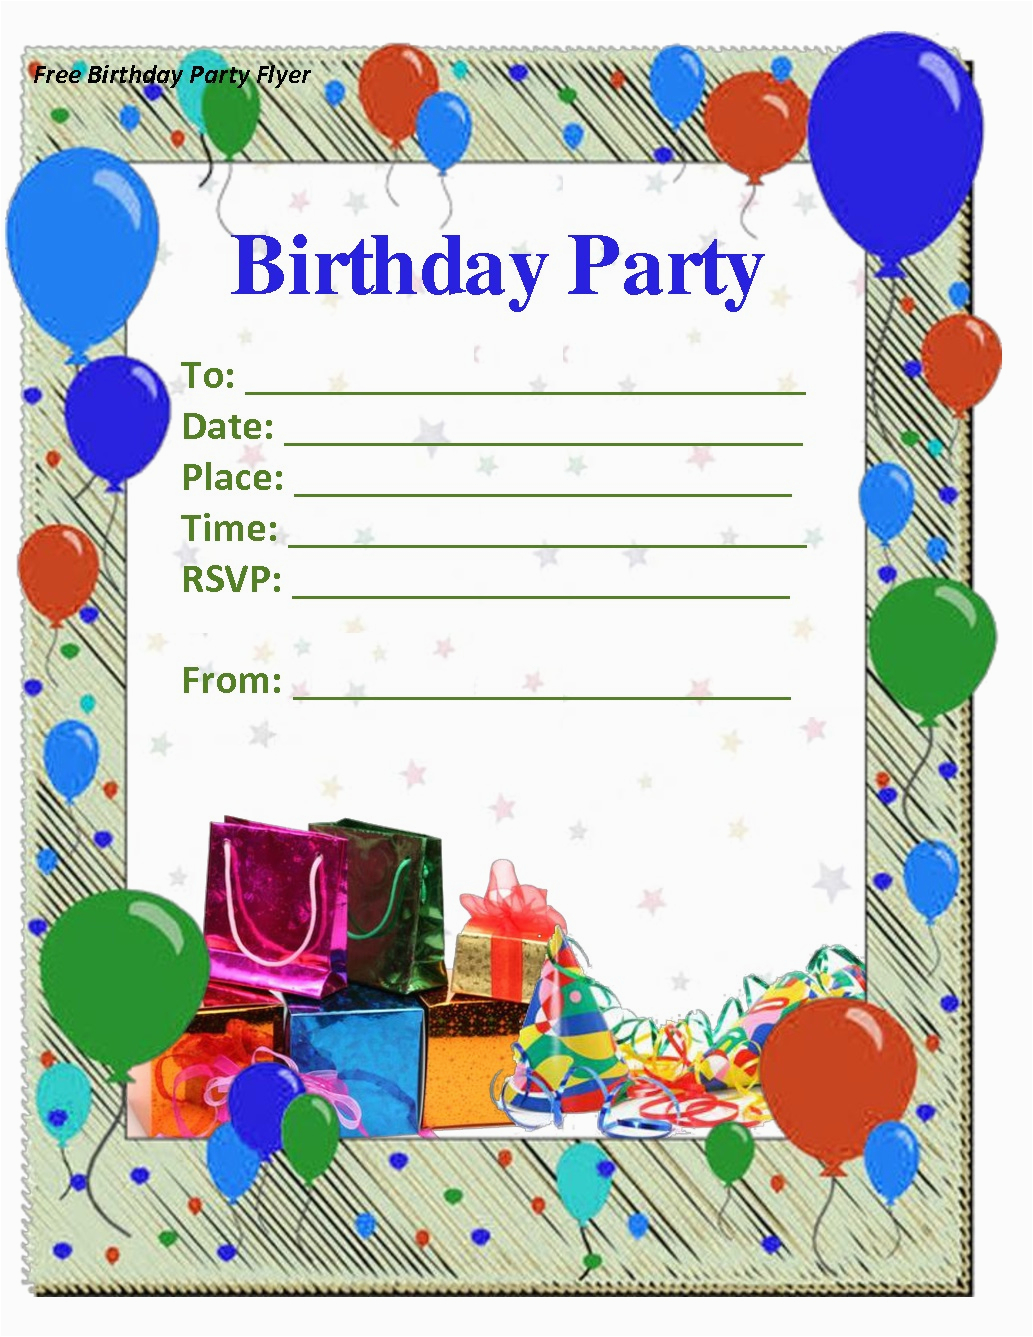 free birthday invitation templates